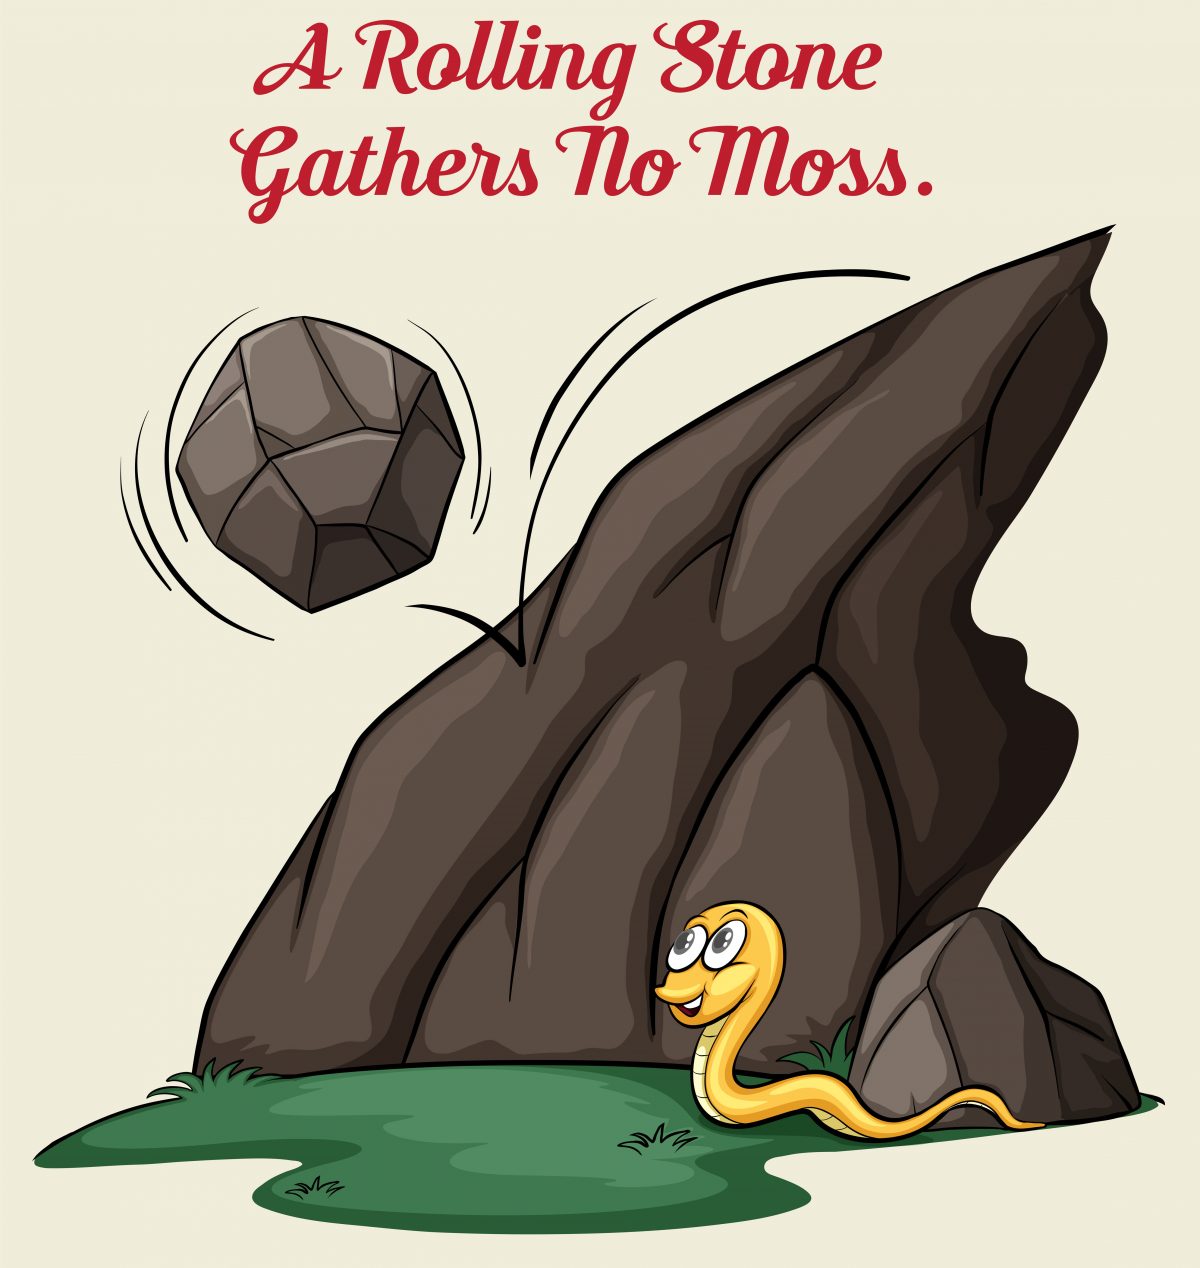 A rolling stone gathers no moss